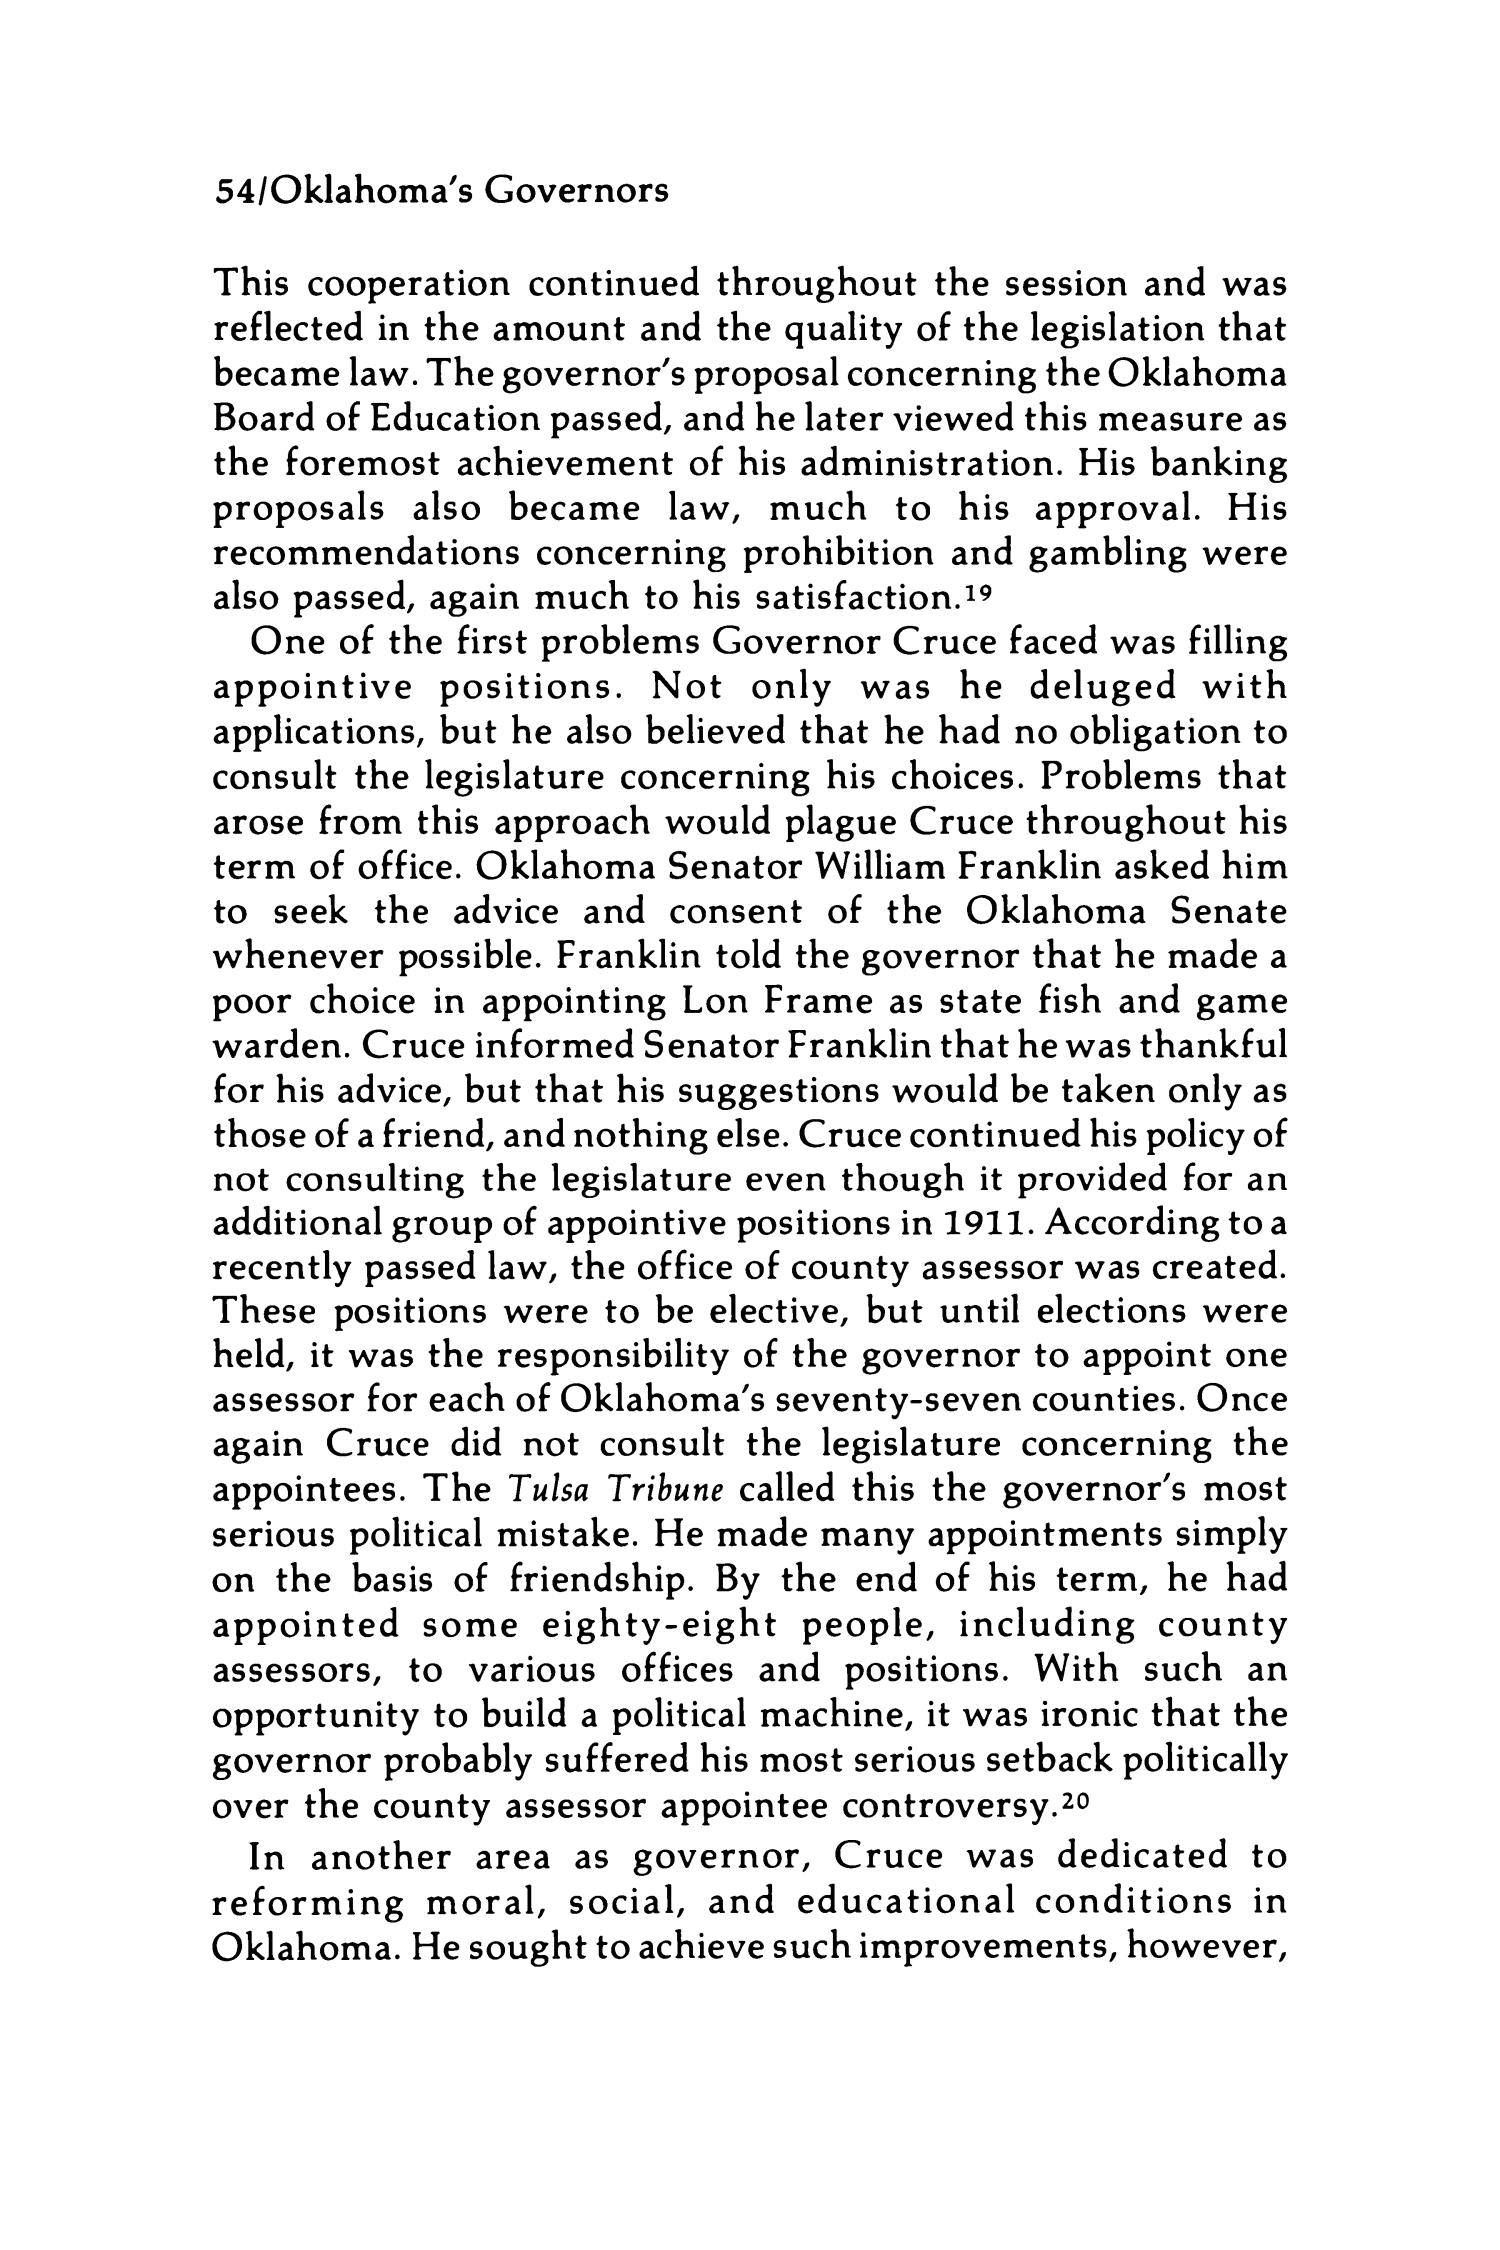 Oklahoma's Governors, 1907-1929: Turbulent Politics
                                                
                                                    54
                                                